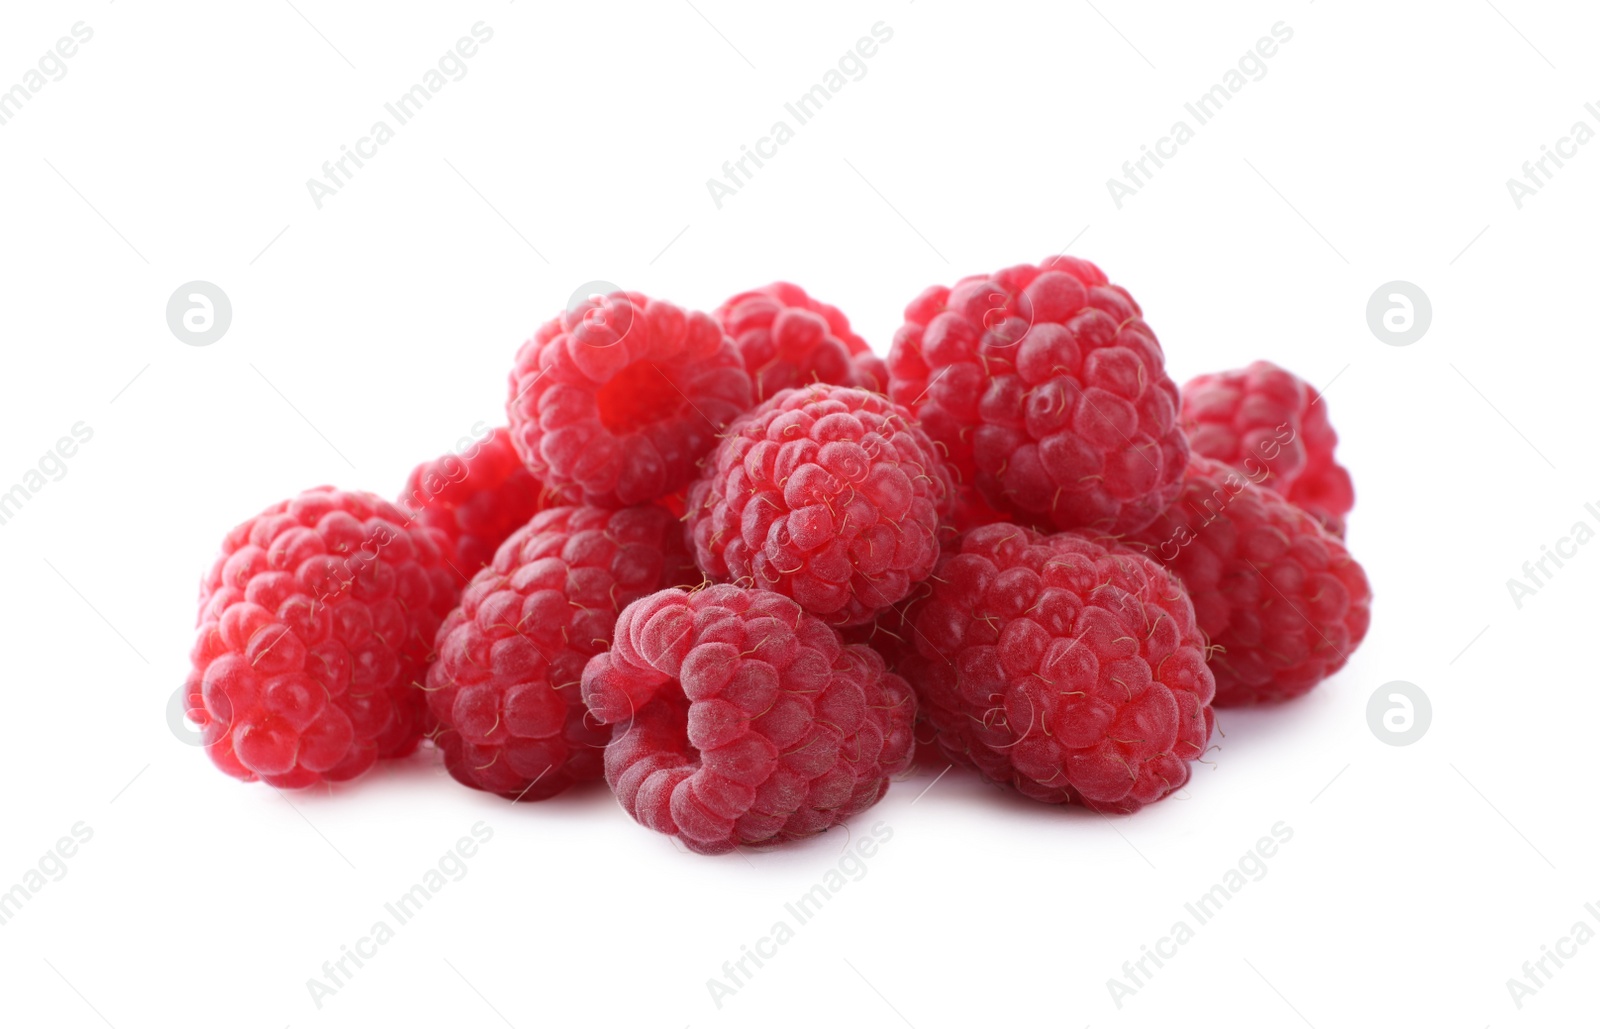 Photo of Delicious fresh ripe raspberries isolated on white